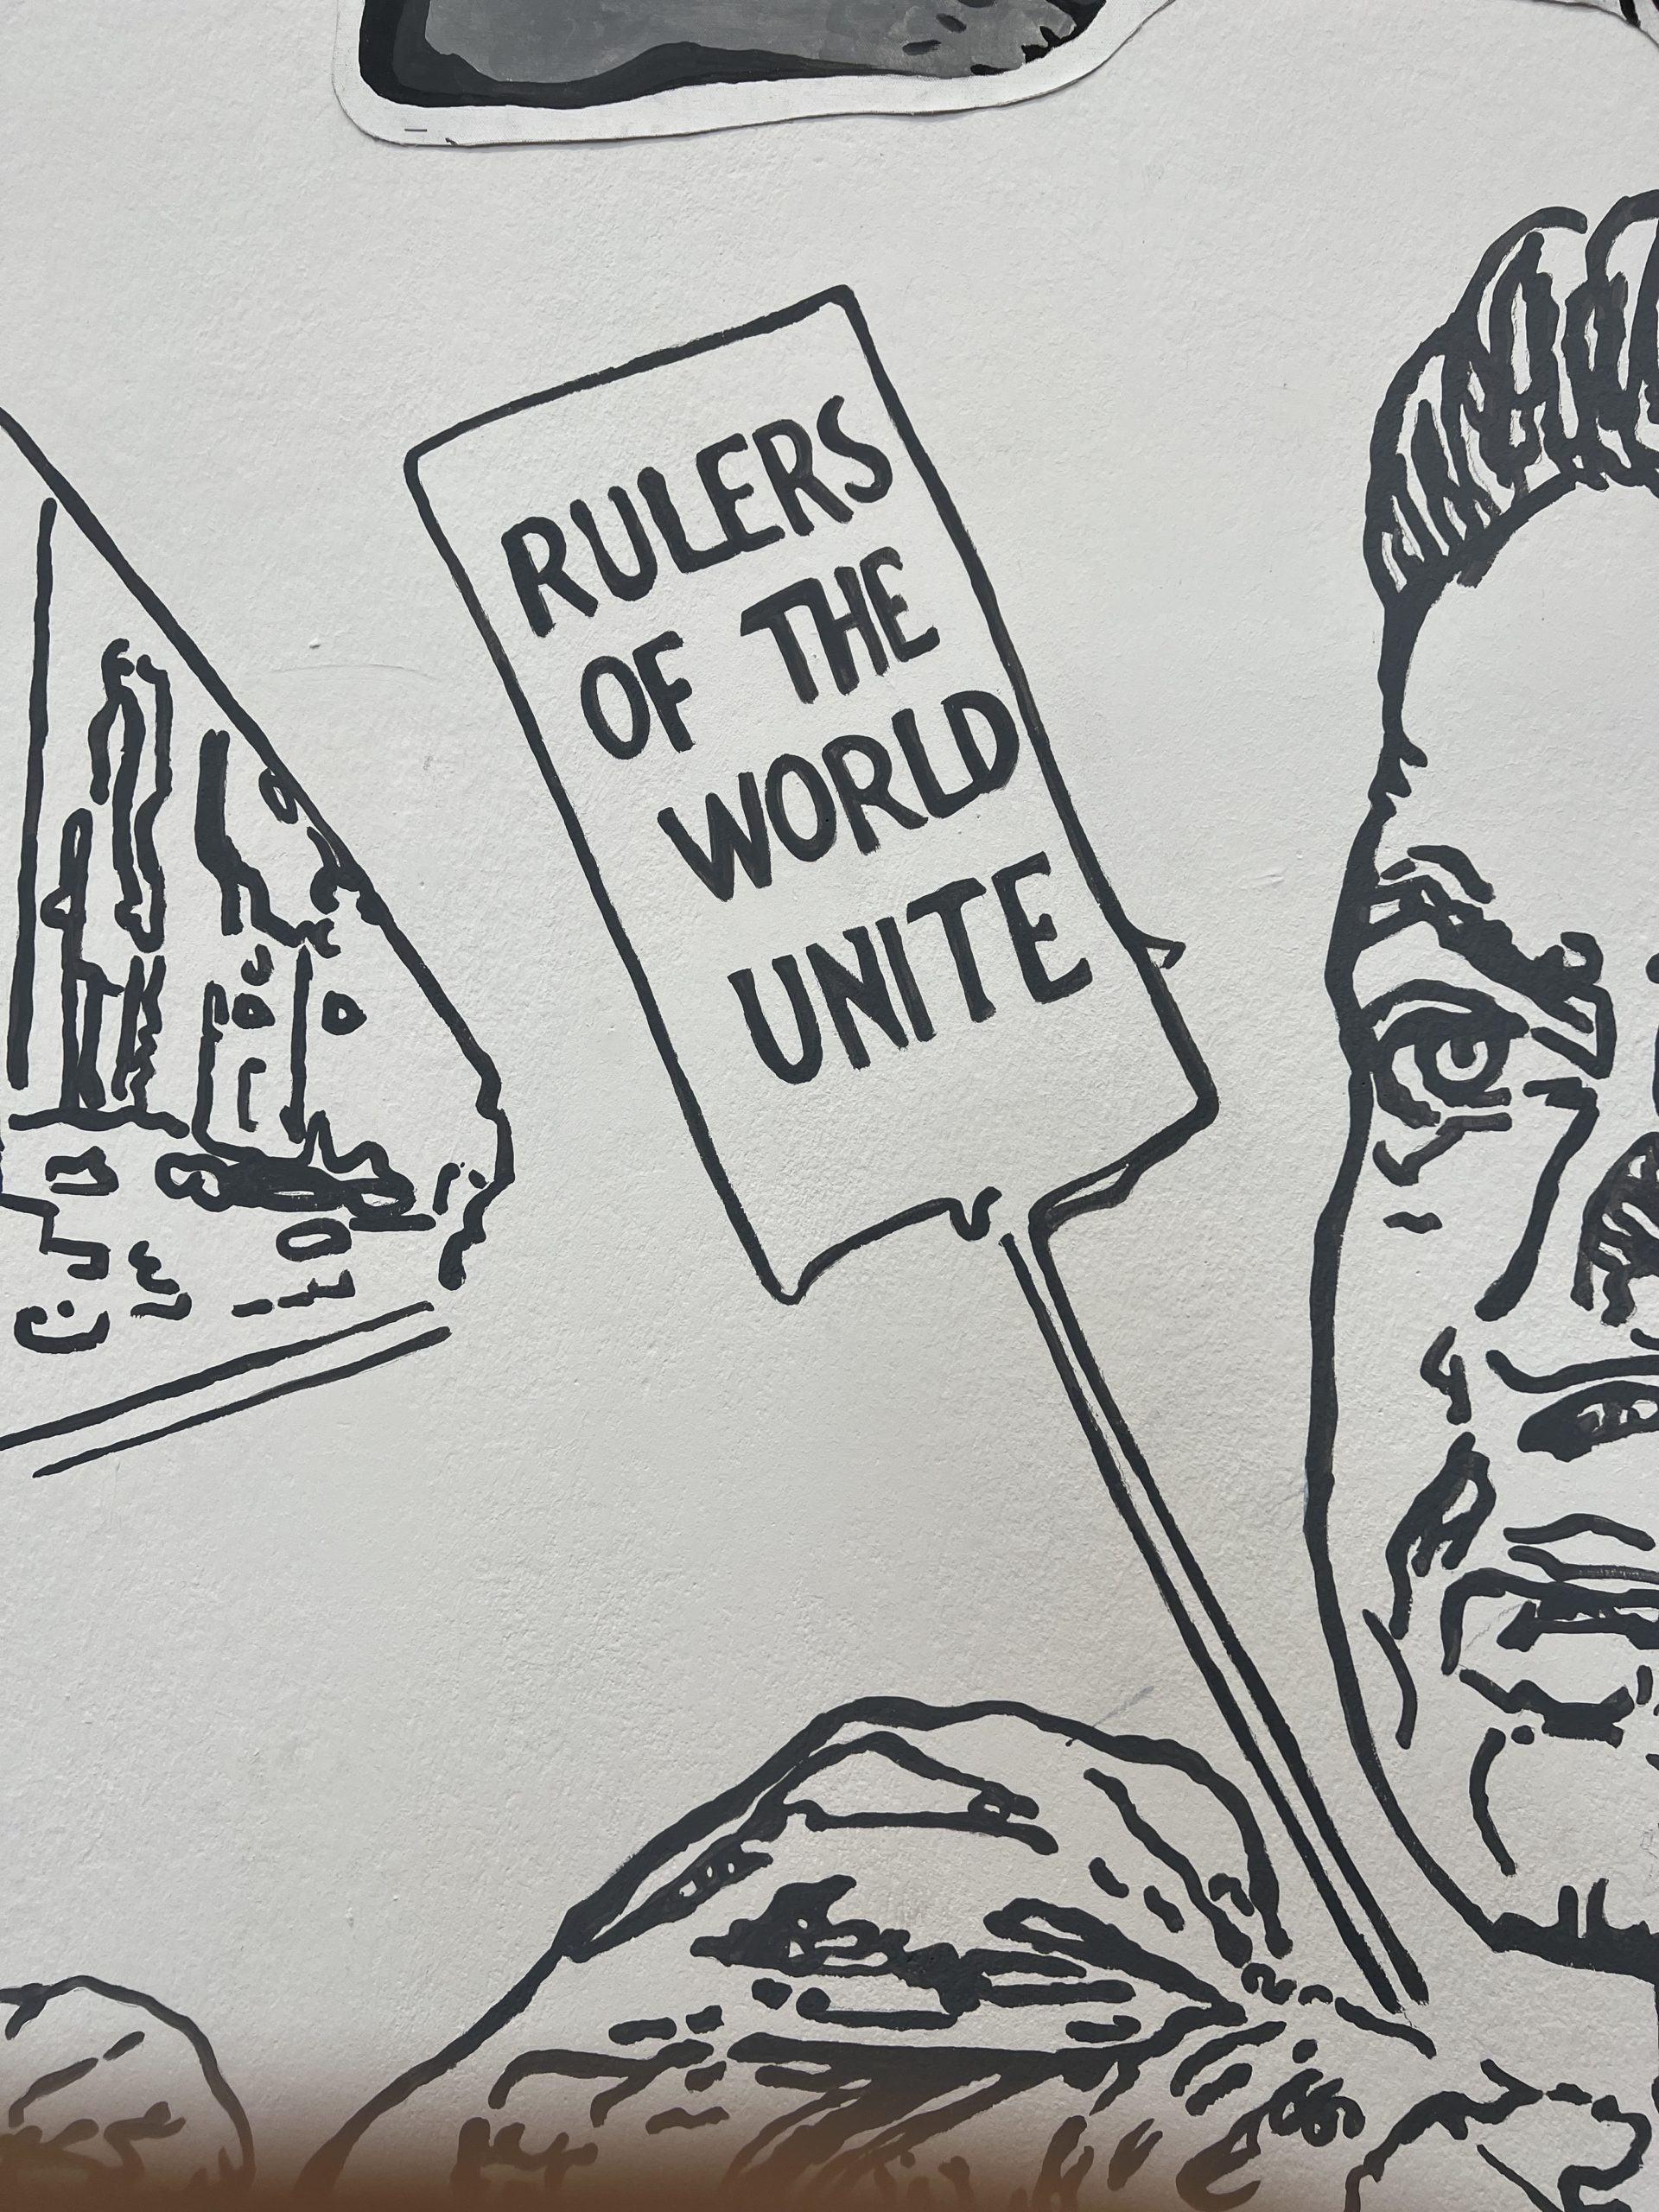 Rulers of the world… unite!